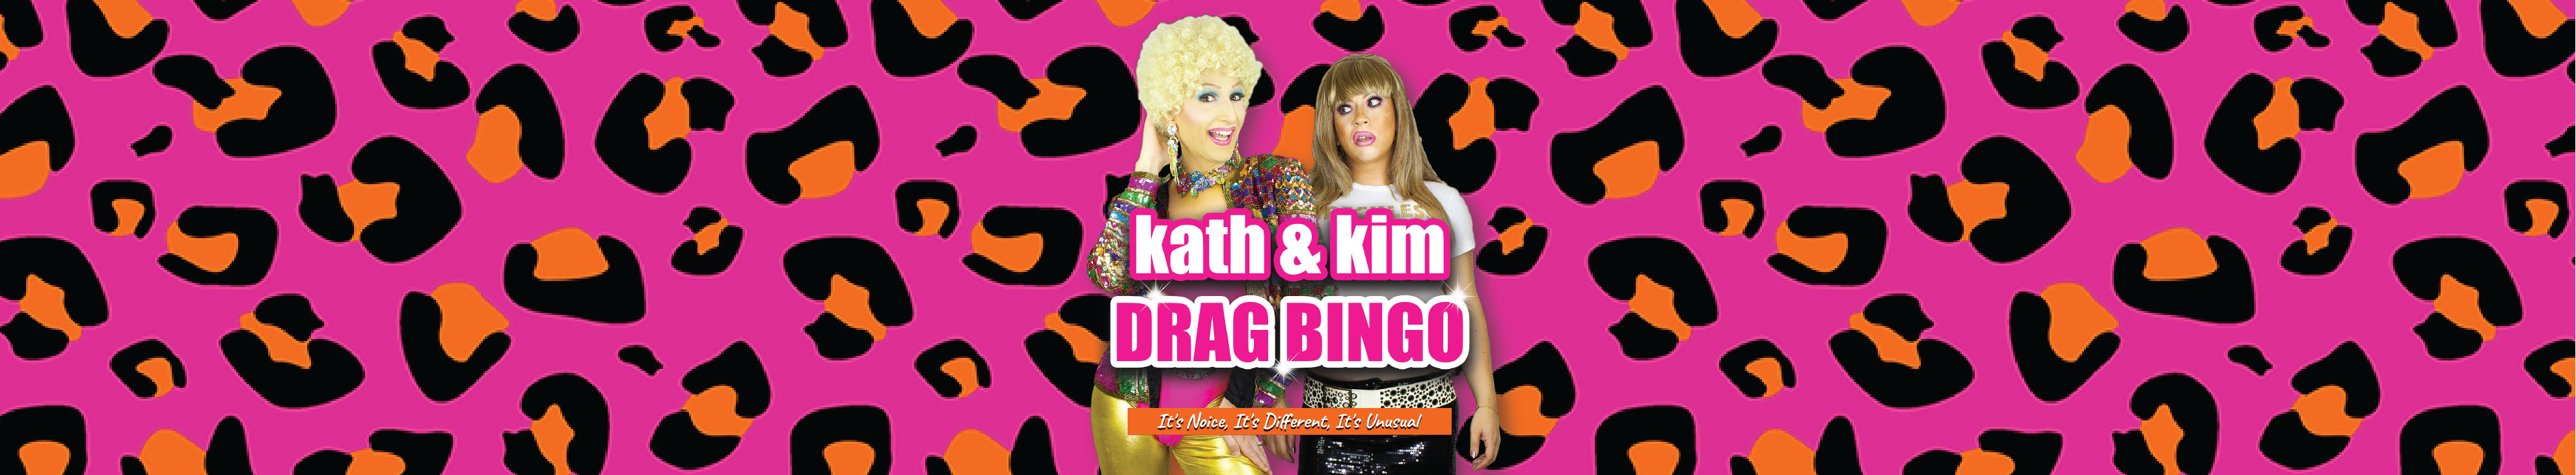 Kath & Kim Drag Bingo | Proserpine Entertainment Centre